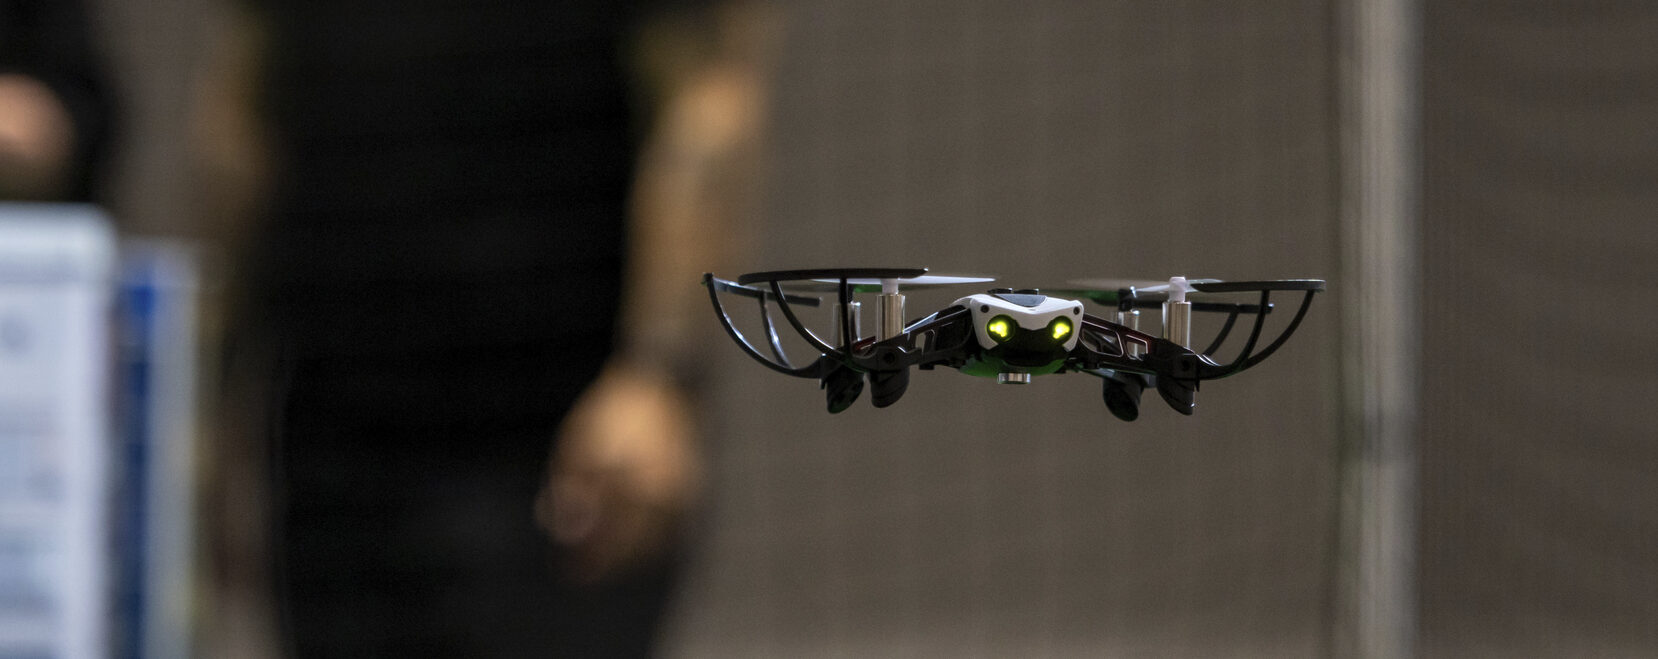 FTW Robotics drone flying